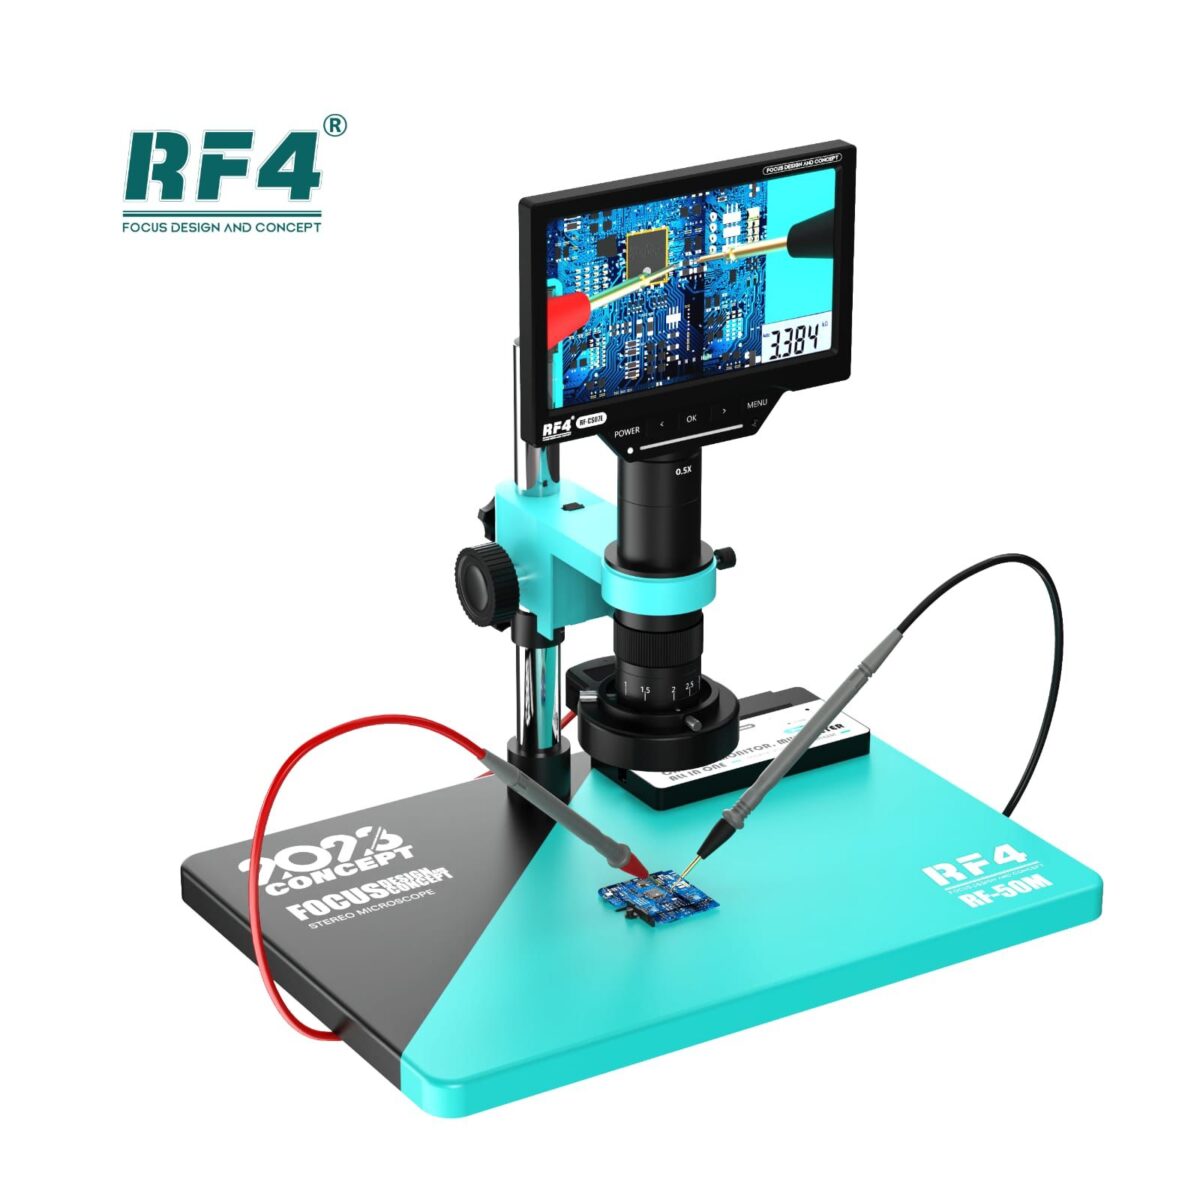 RF4 RF 50M Digital HD Microscope Built in HD Camera LCD Display For Precision Instrument Repair Provides Multimeter Function